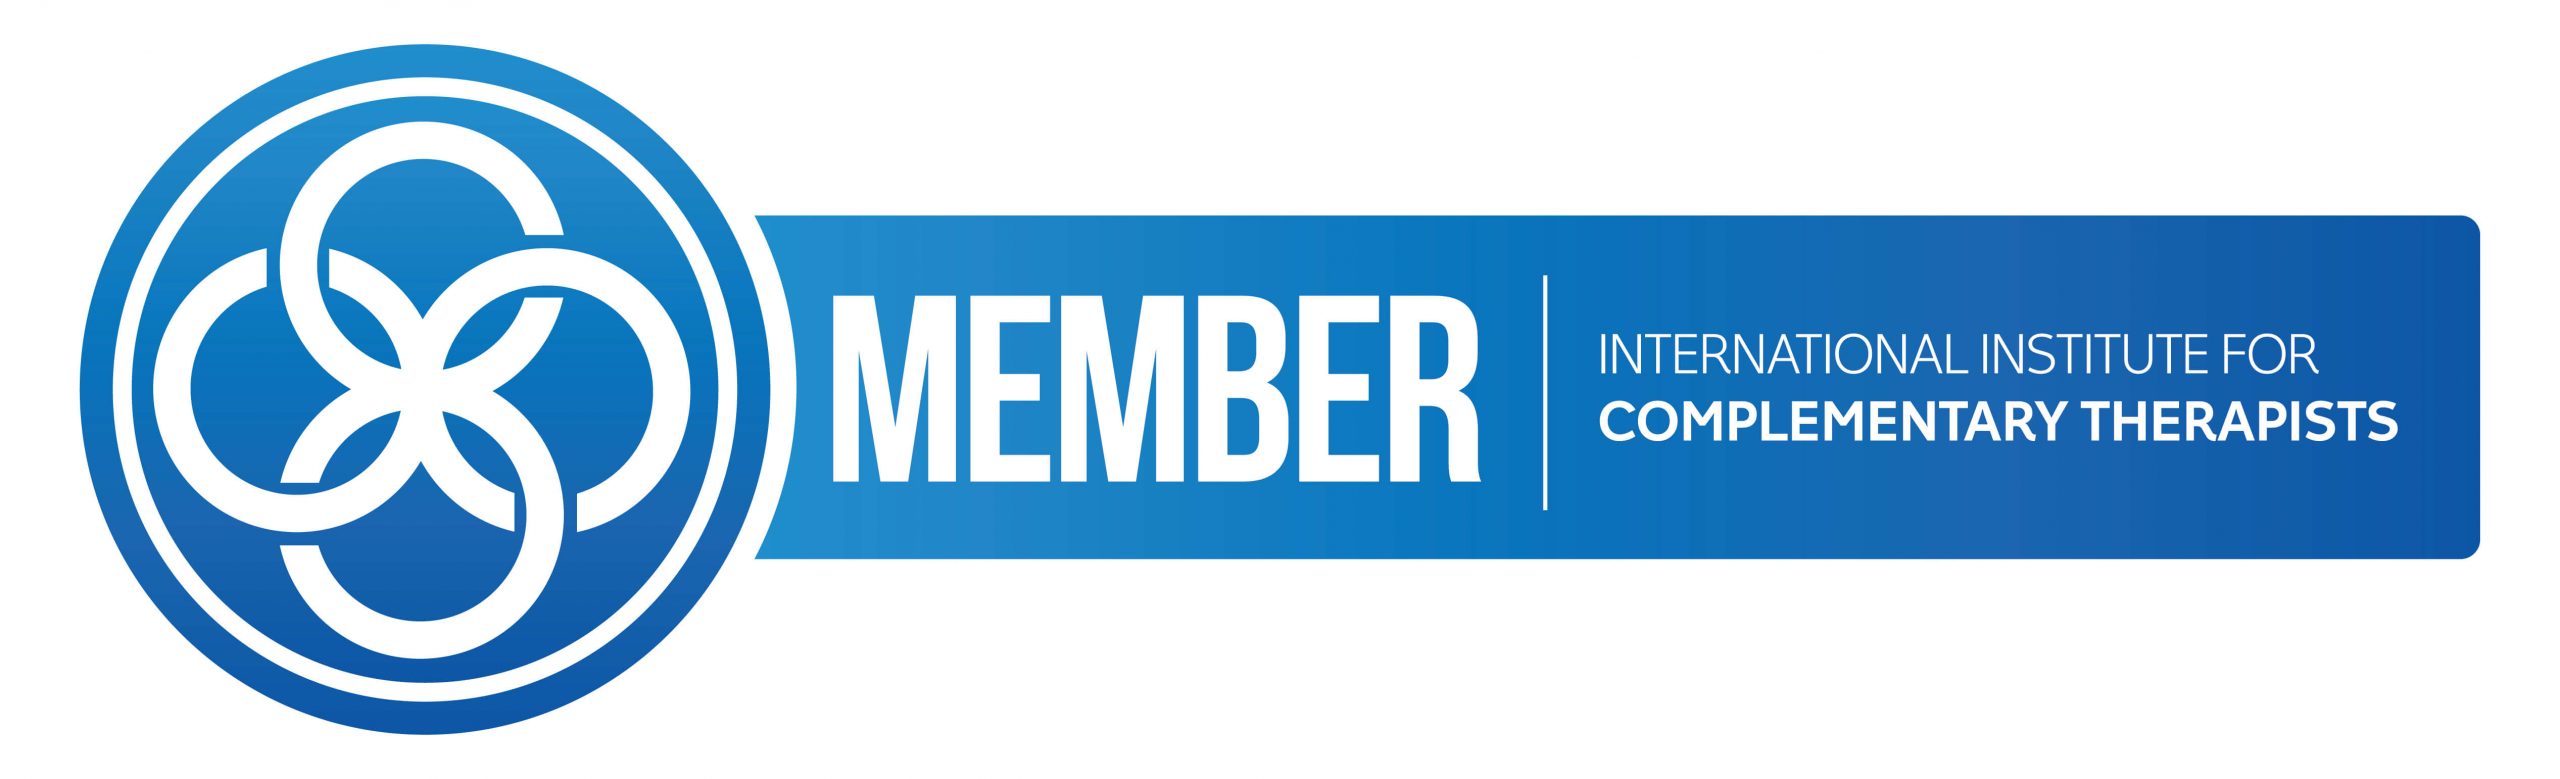 IICT Member logo